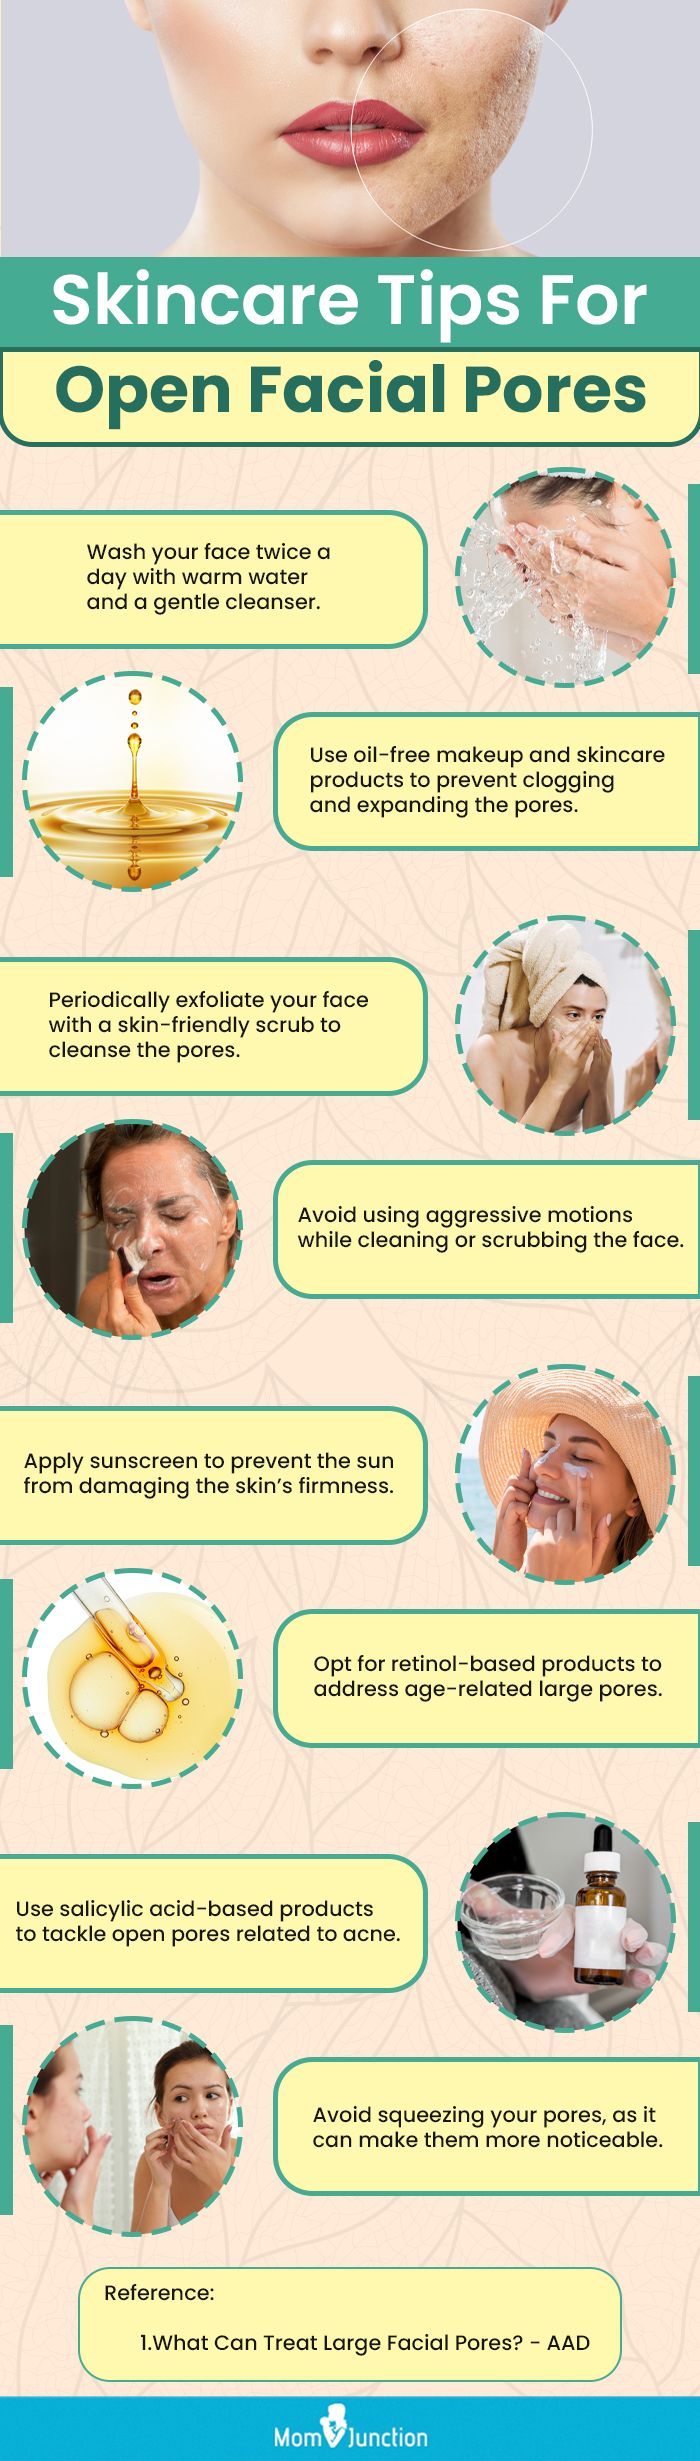 Skincare Tips For Open Facial Pores (infographic)